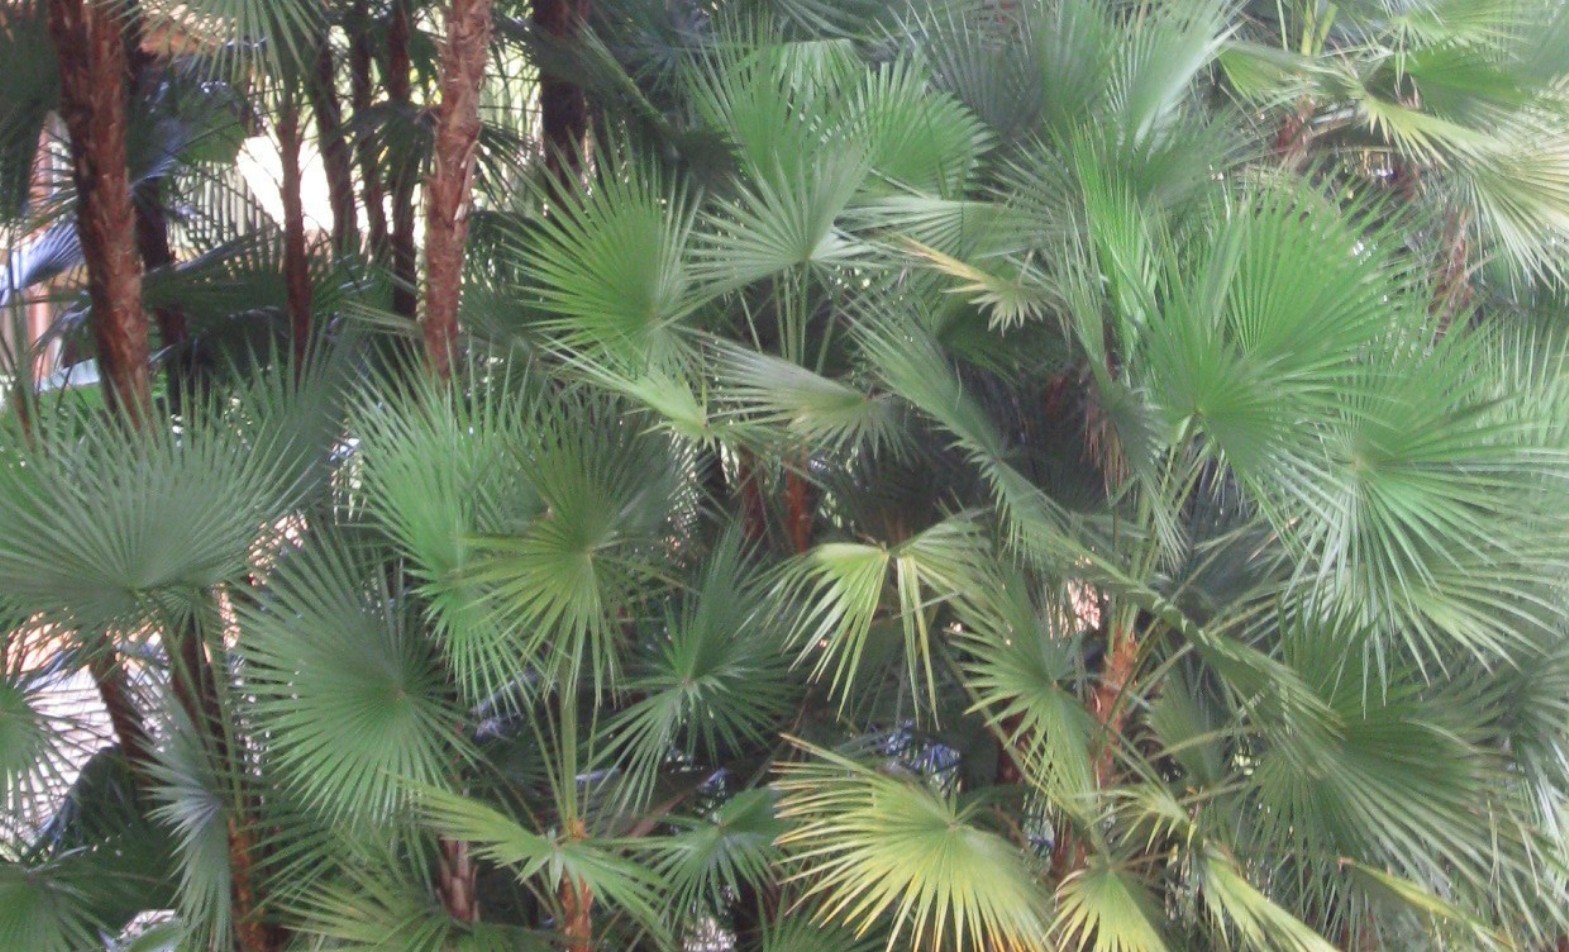 Acoelorrhaphe wrightii  / Everglades Palm or Paurotis Palm